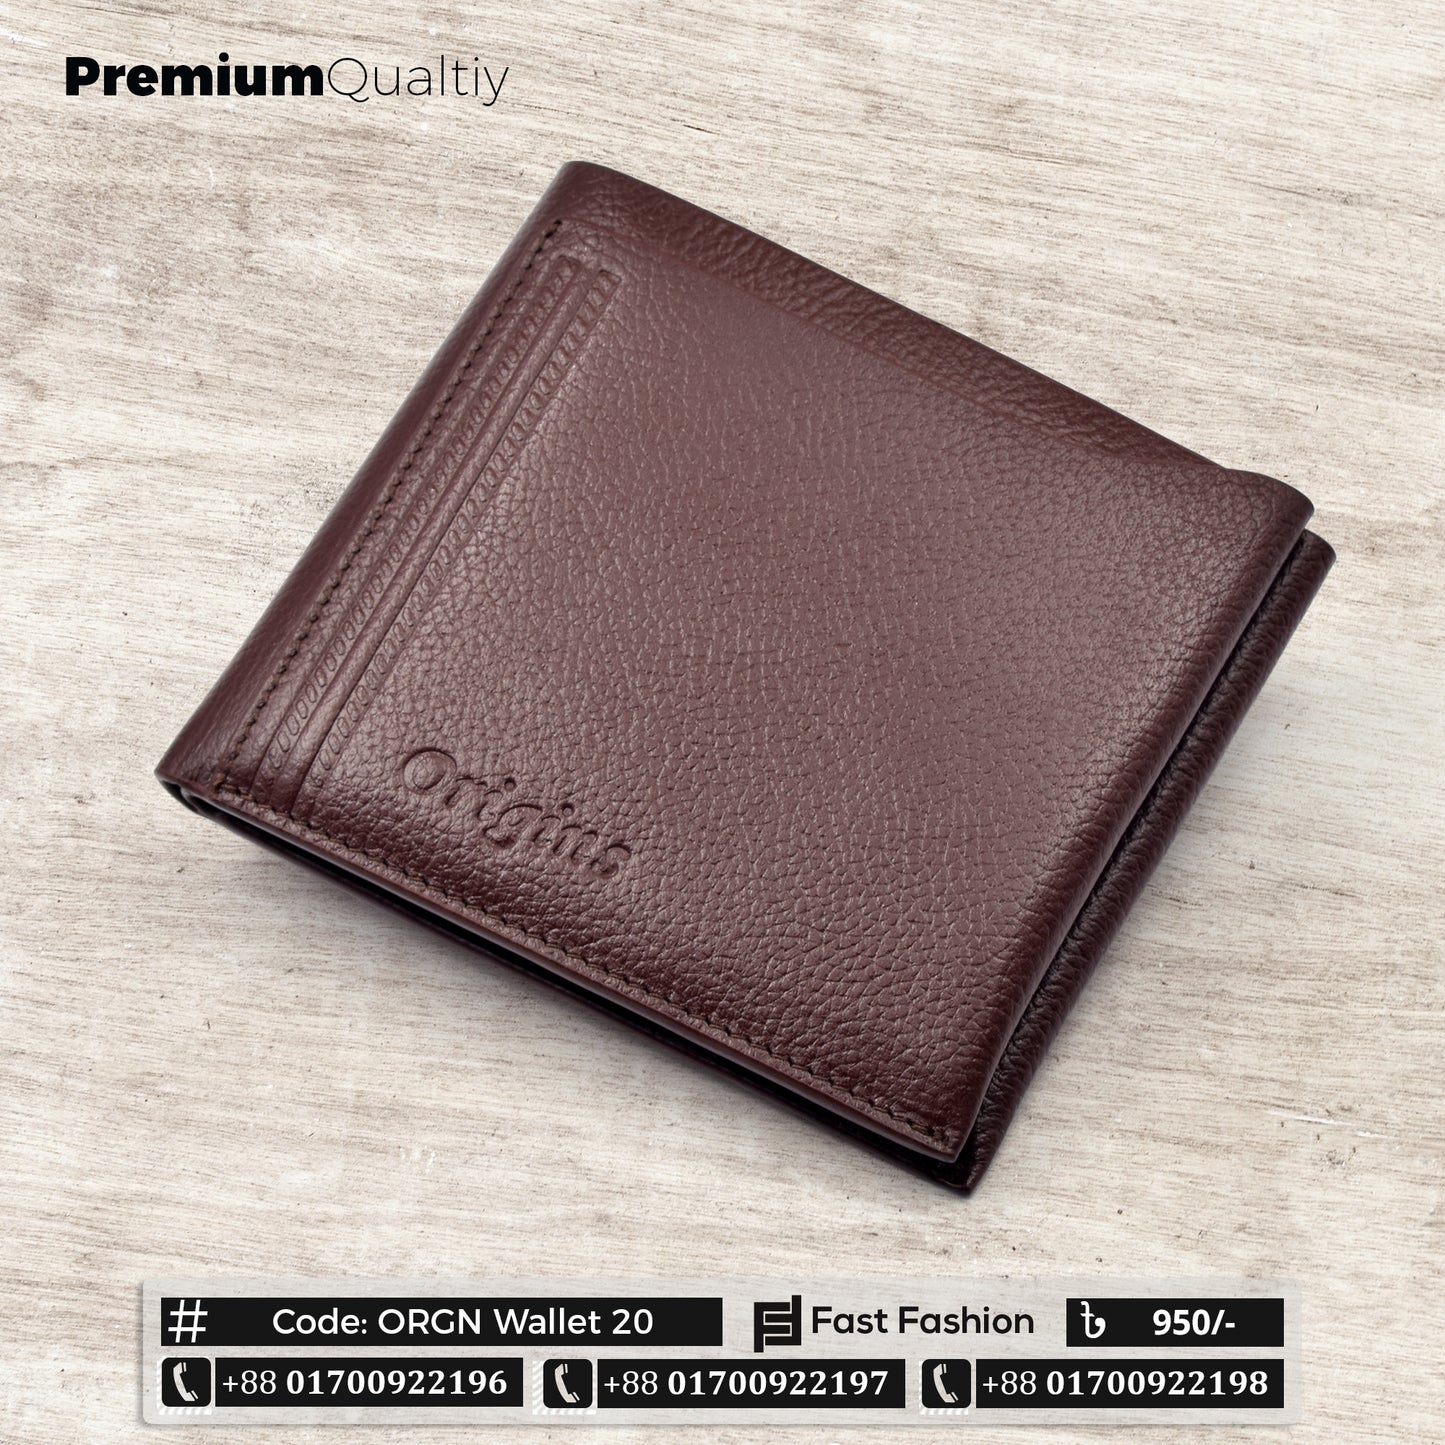 Pocket Size Premium Quality Leather Wallet for Men | ORGN Wallet 20